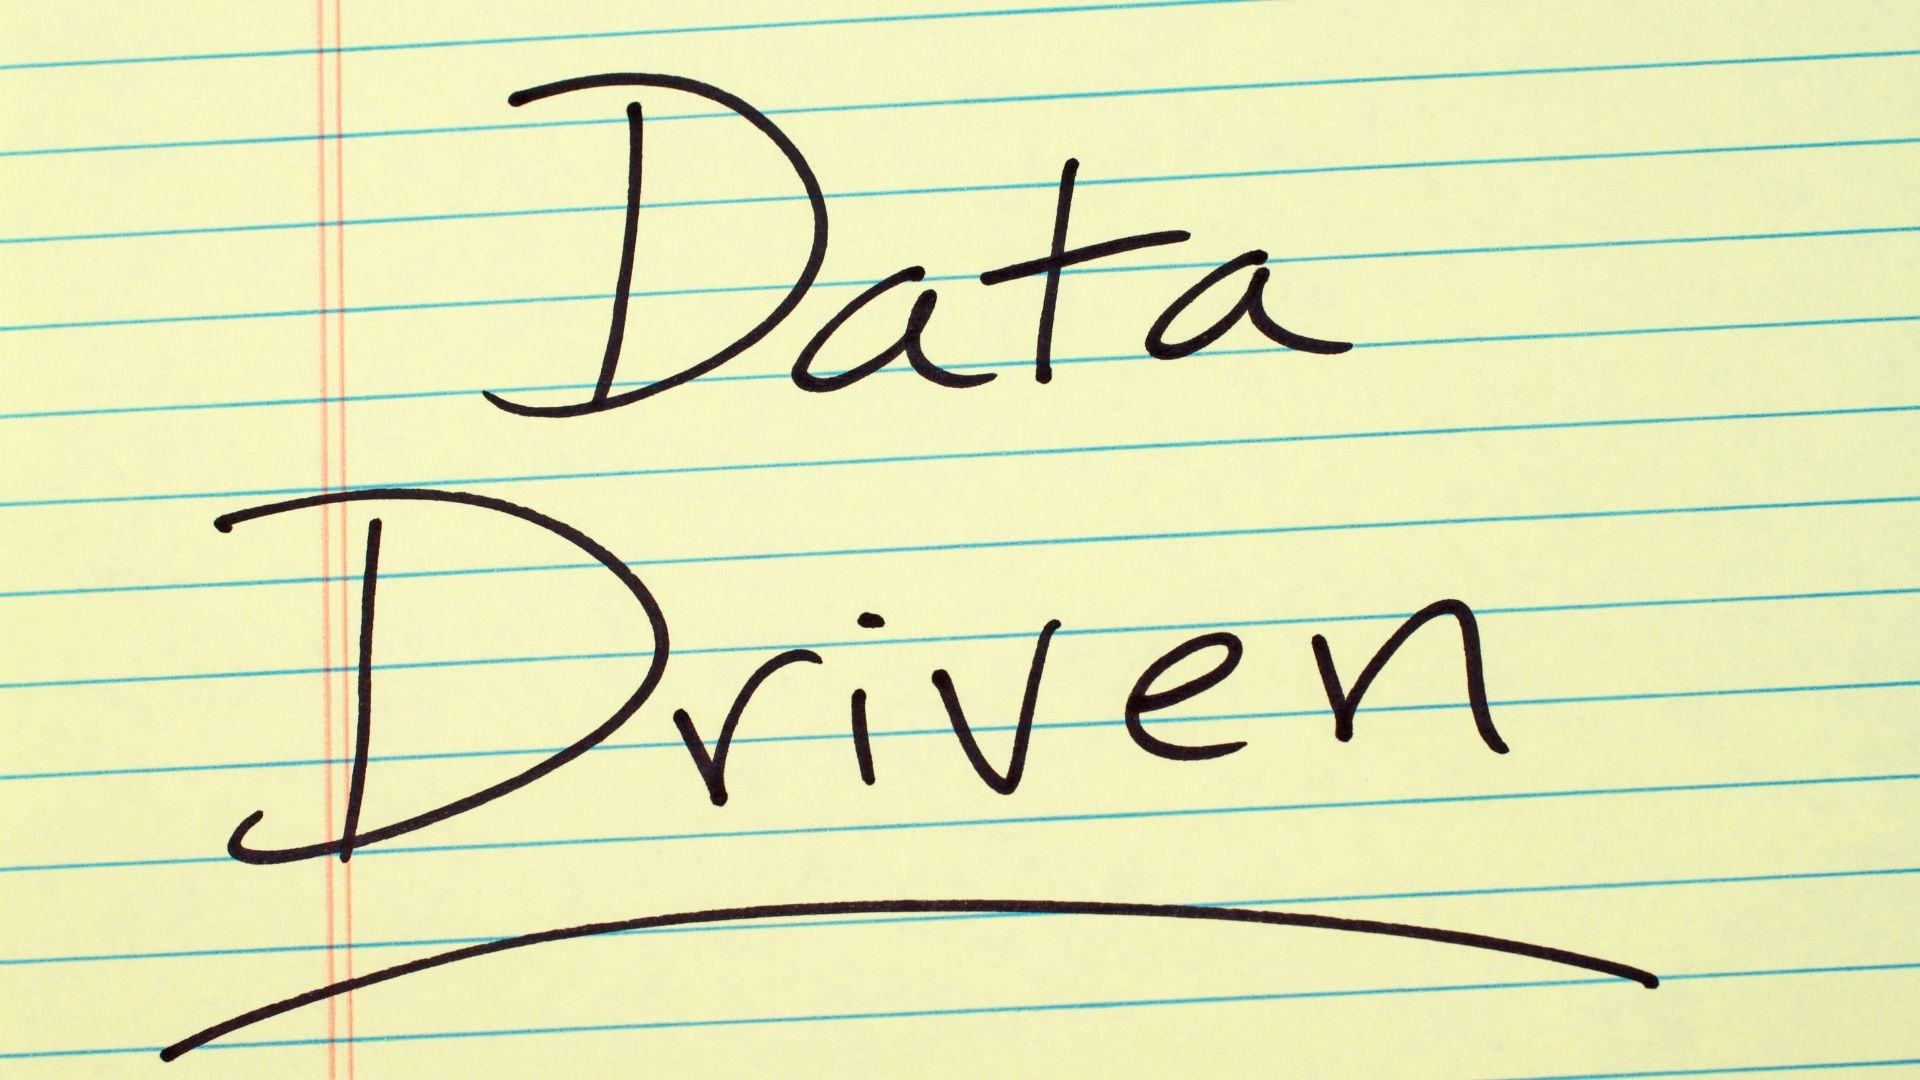 "Data driven" written on paper